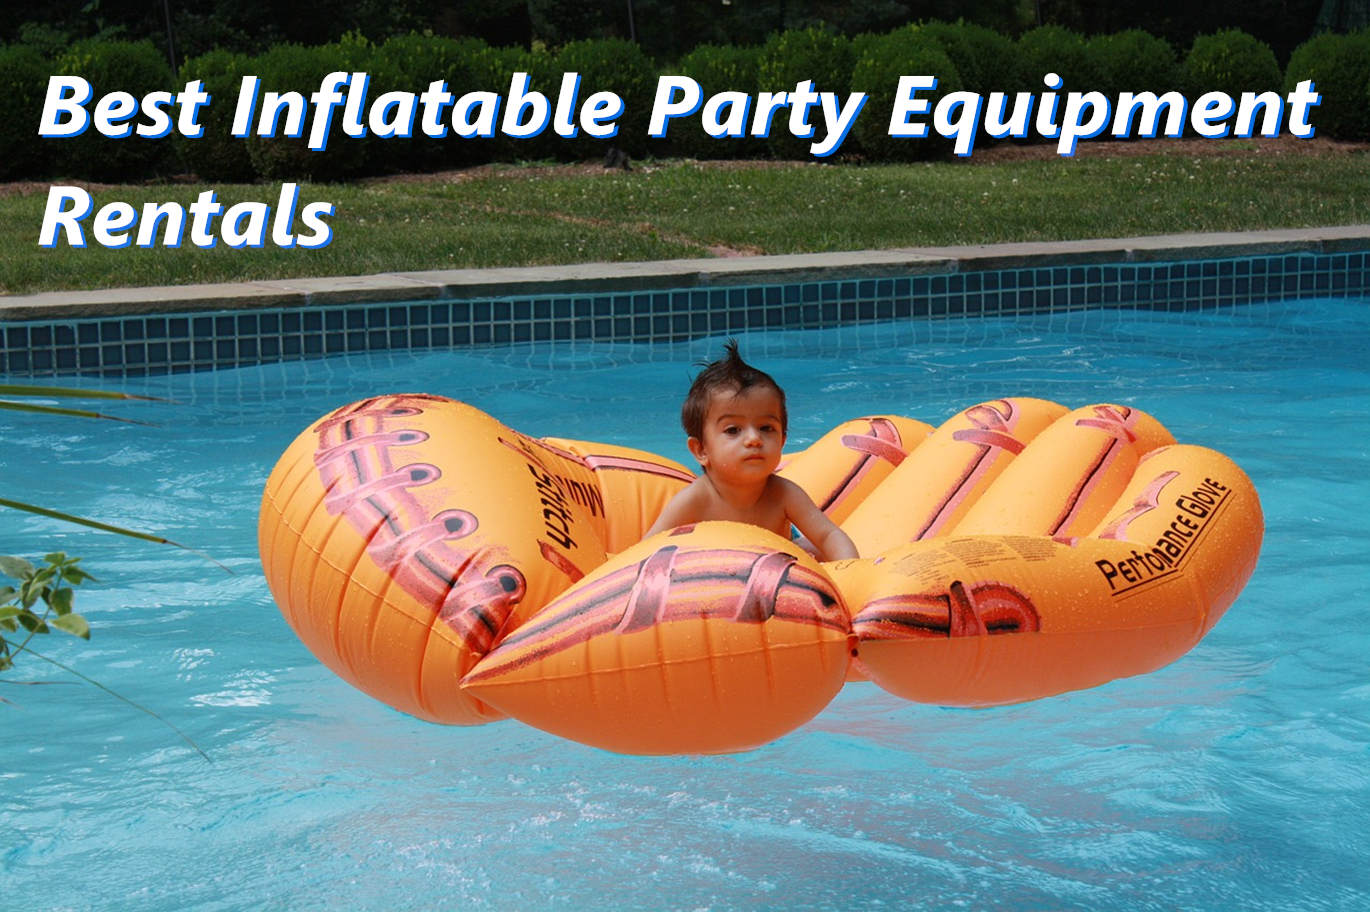 Top 50 Inflatable Party Equipment Rentals